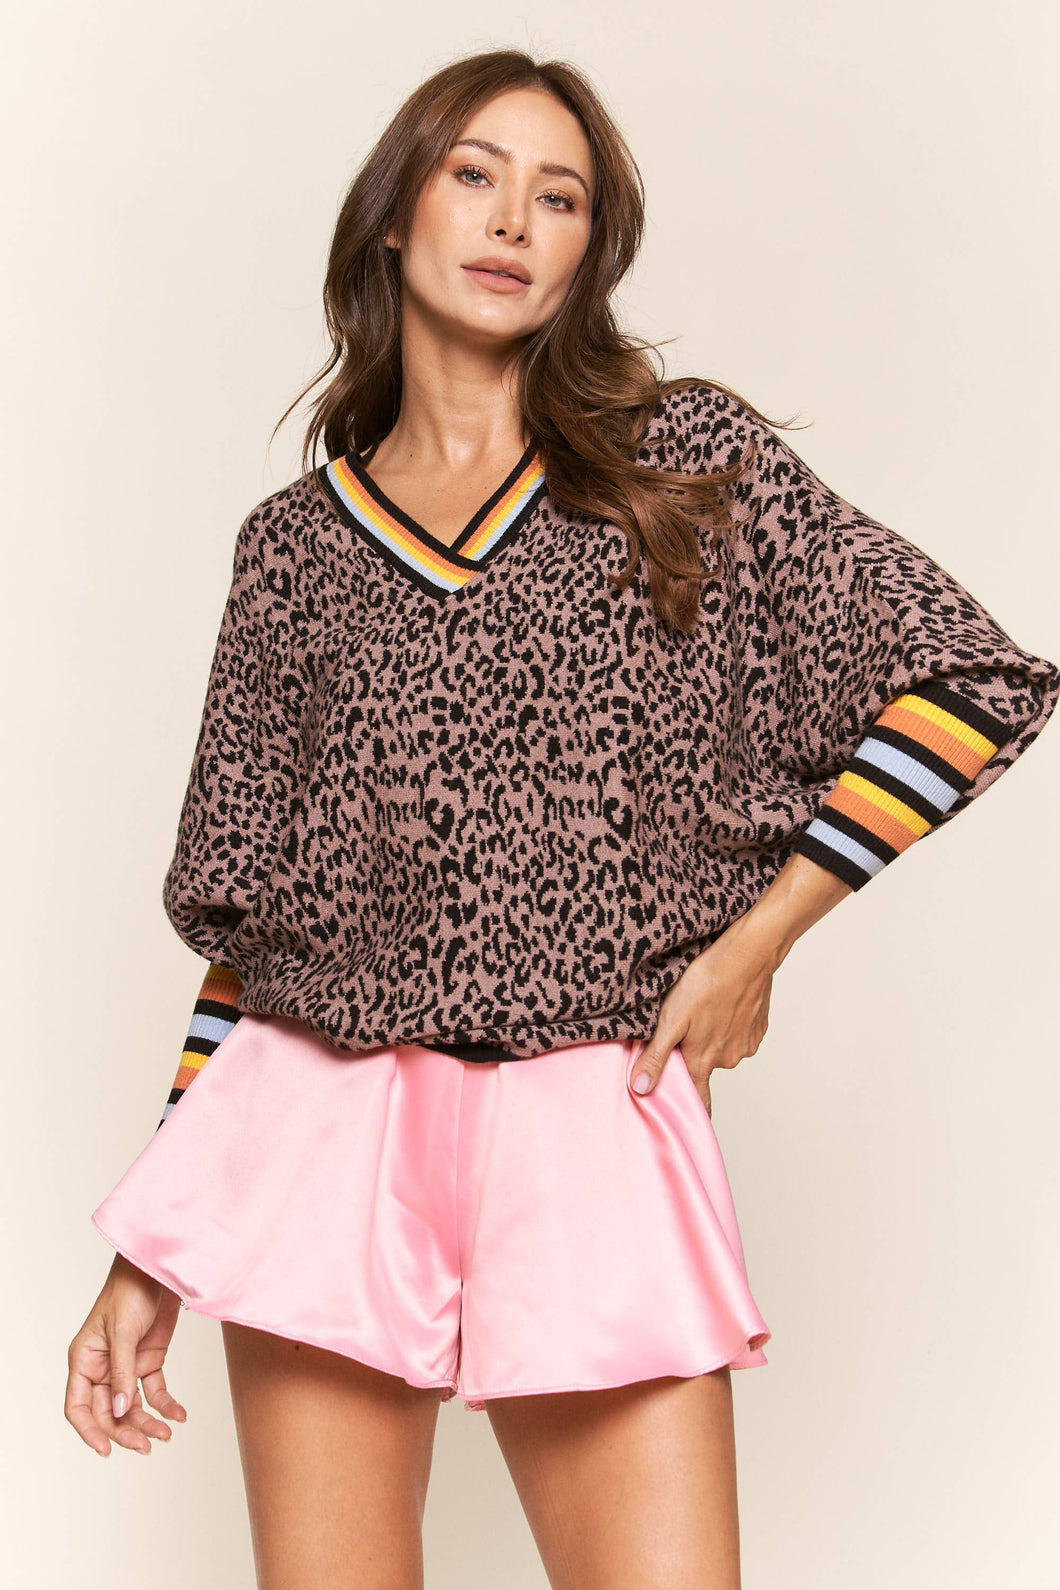 J.NNA - Leopard Print V-Neck Sweater Top